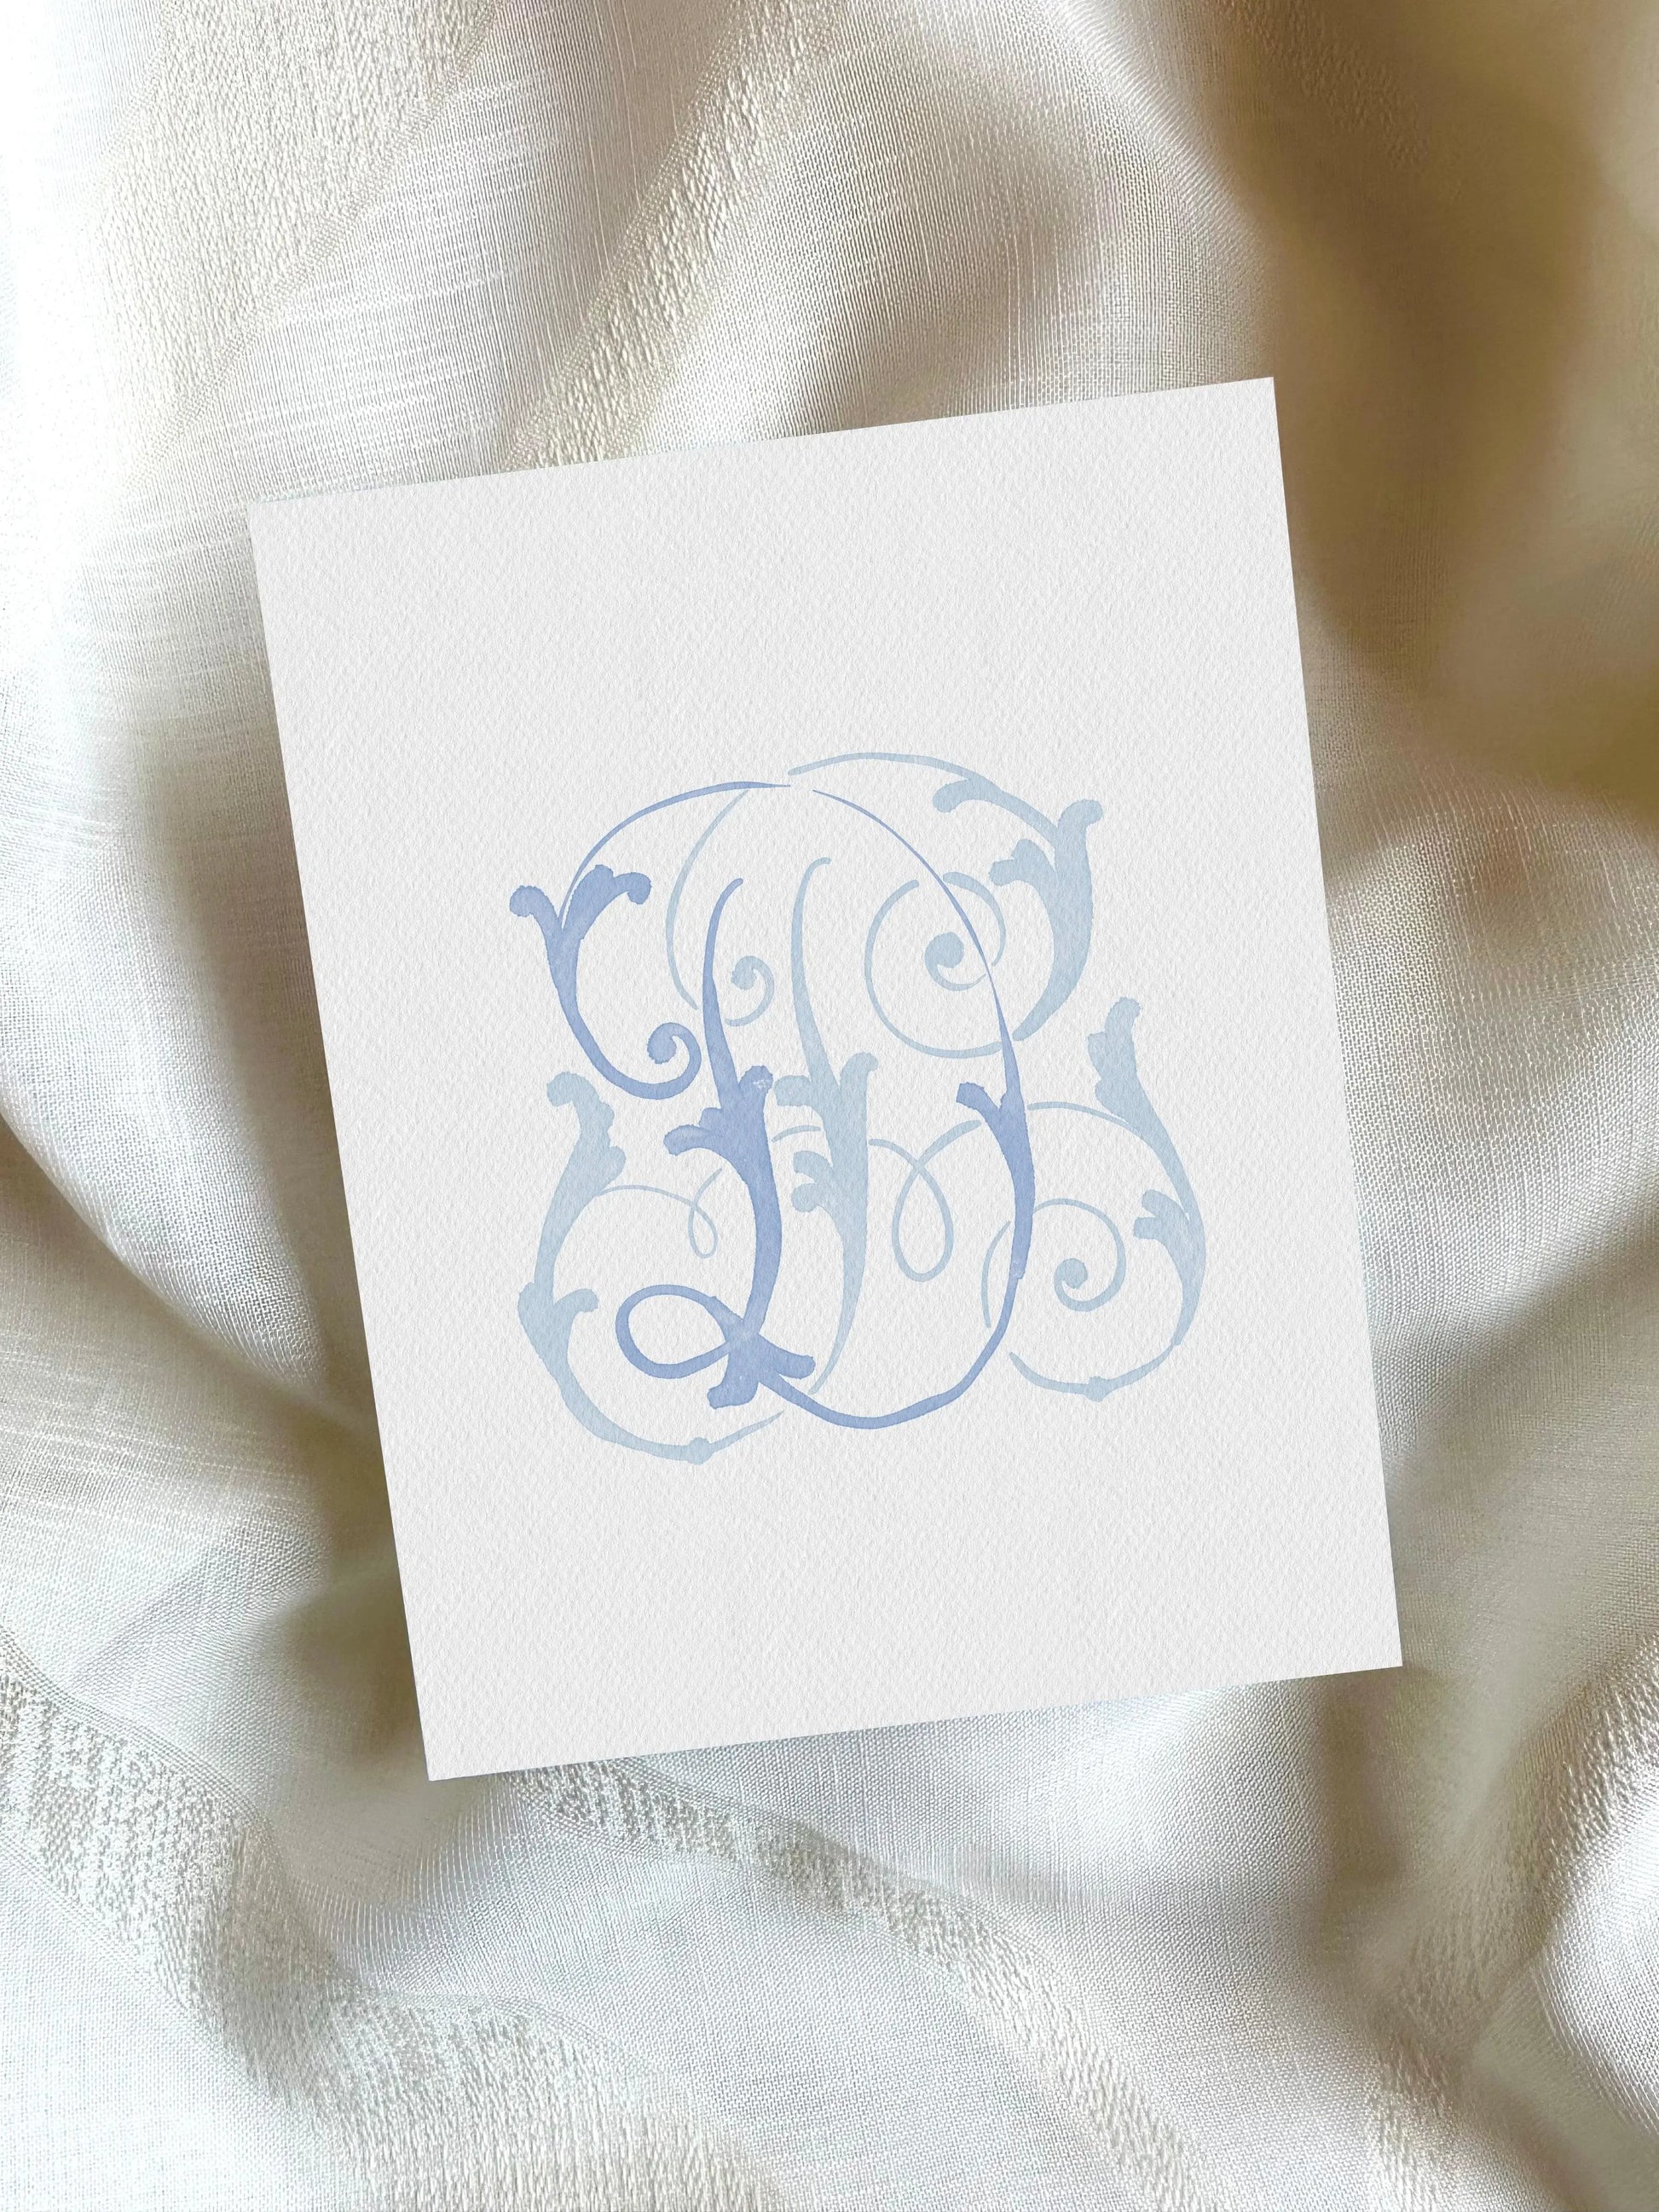 2 Letter Monogram with Letters DB | Digital Download - Wedding Monogram SVG, Personal Logo, Wedding Logo for Wedding Invitations The Wedding Crest Lab